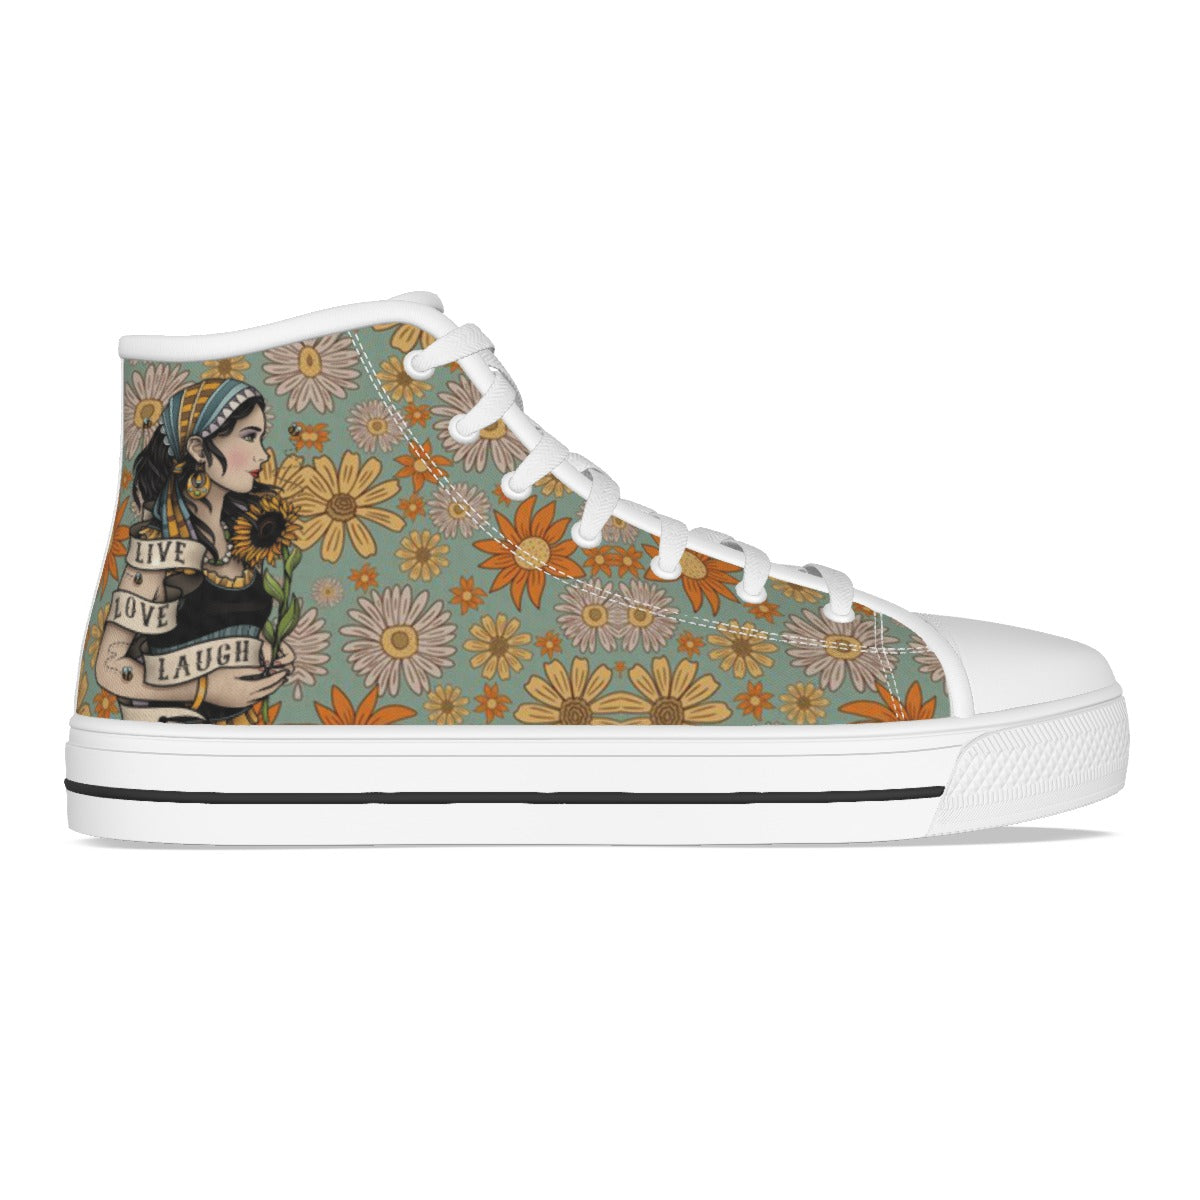 EShoes Personalized Flower Women's Canvas Shoes, Flower Shoes, Custom Shoes, Hippie Shoes.